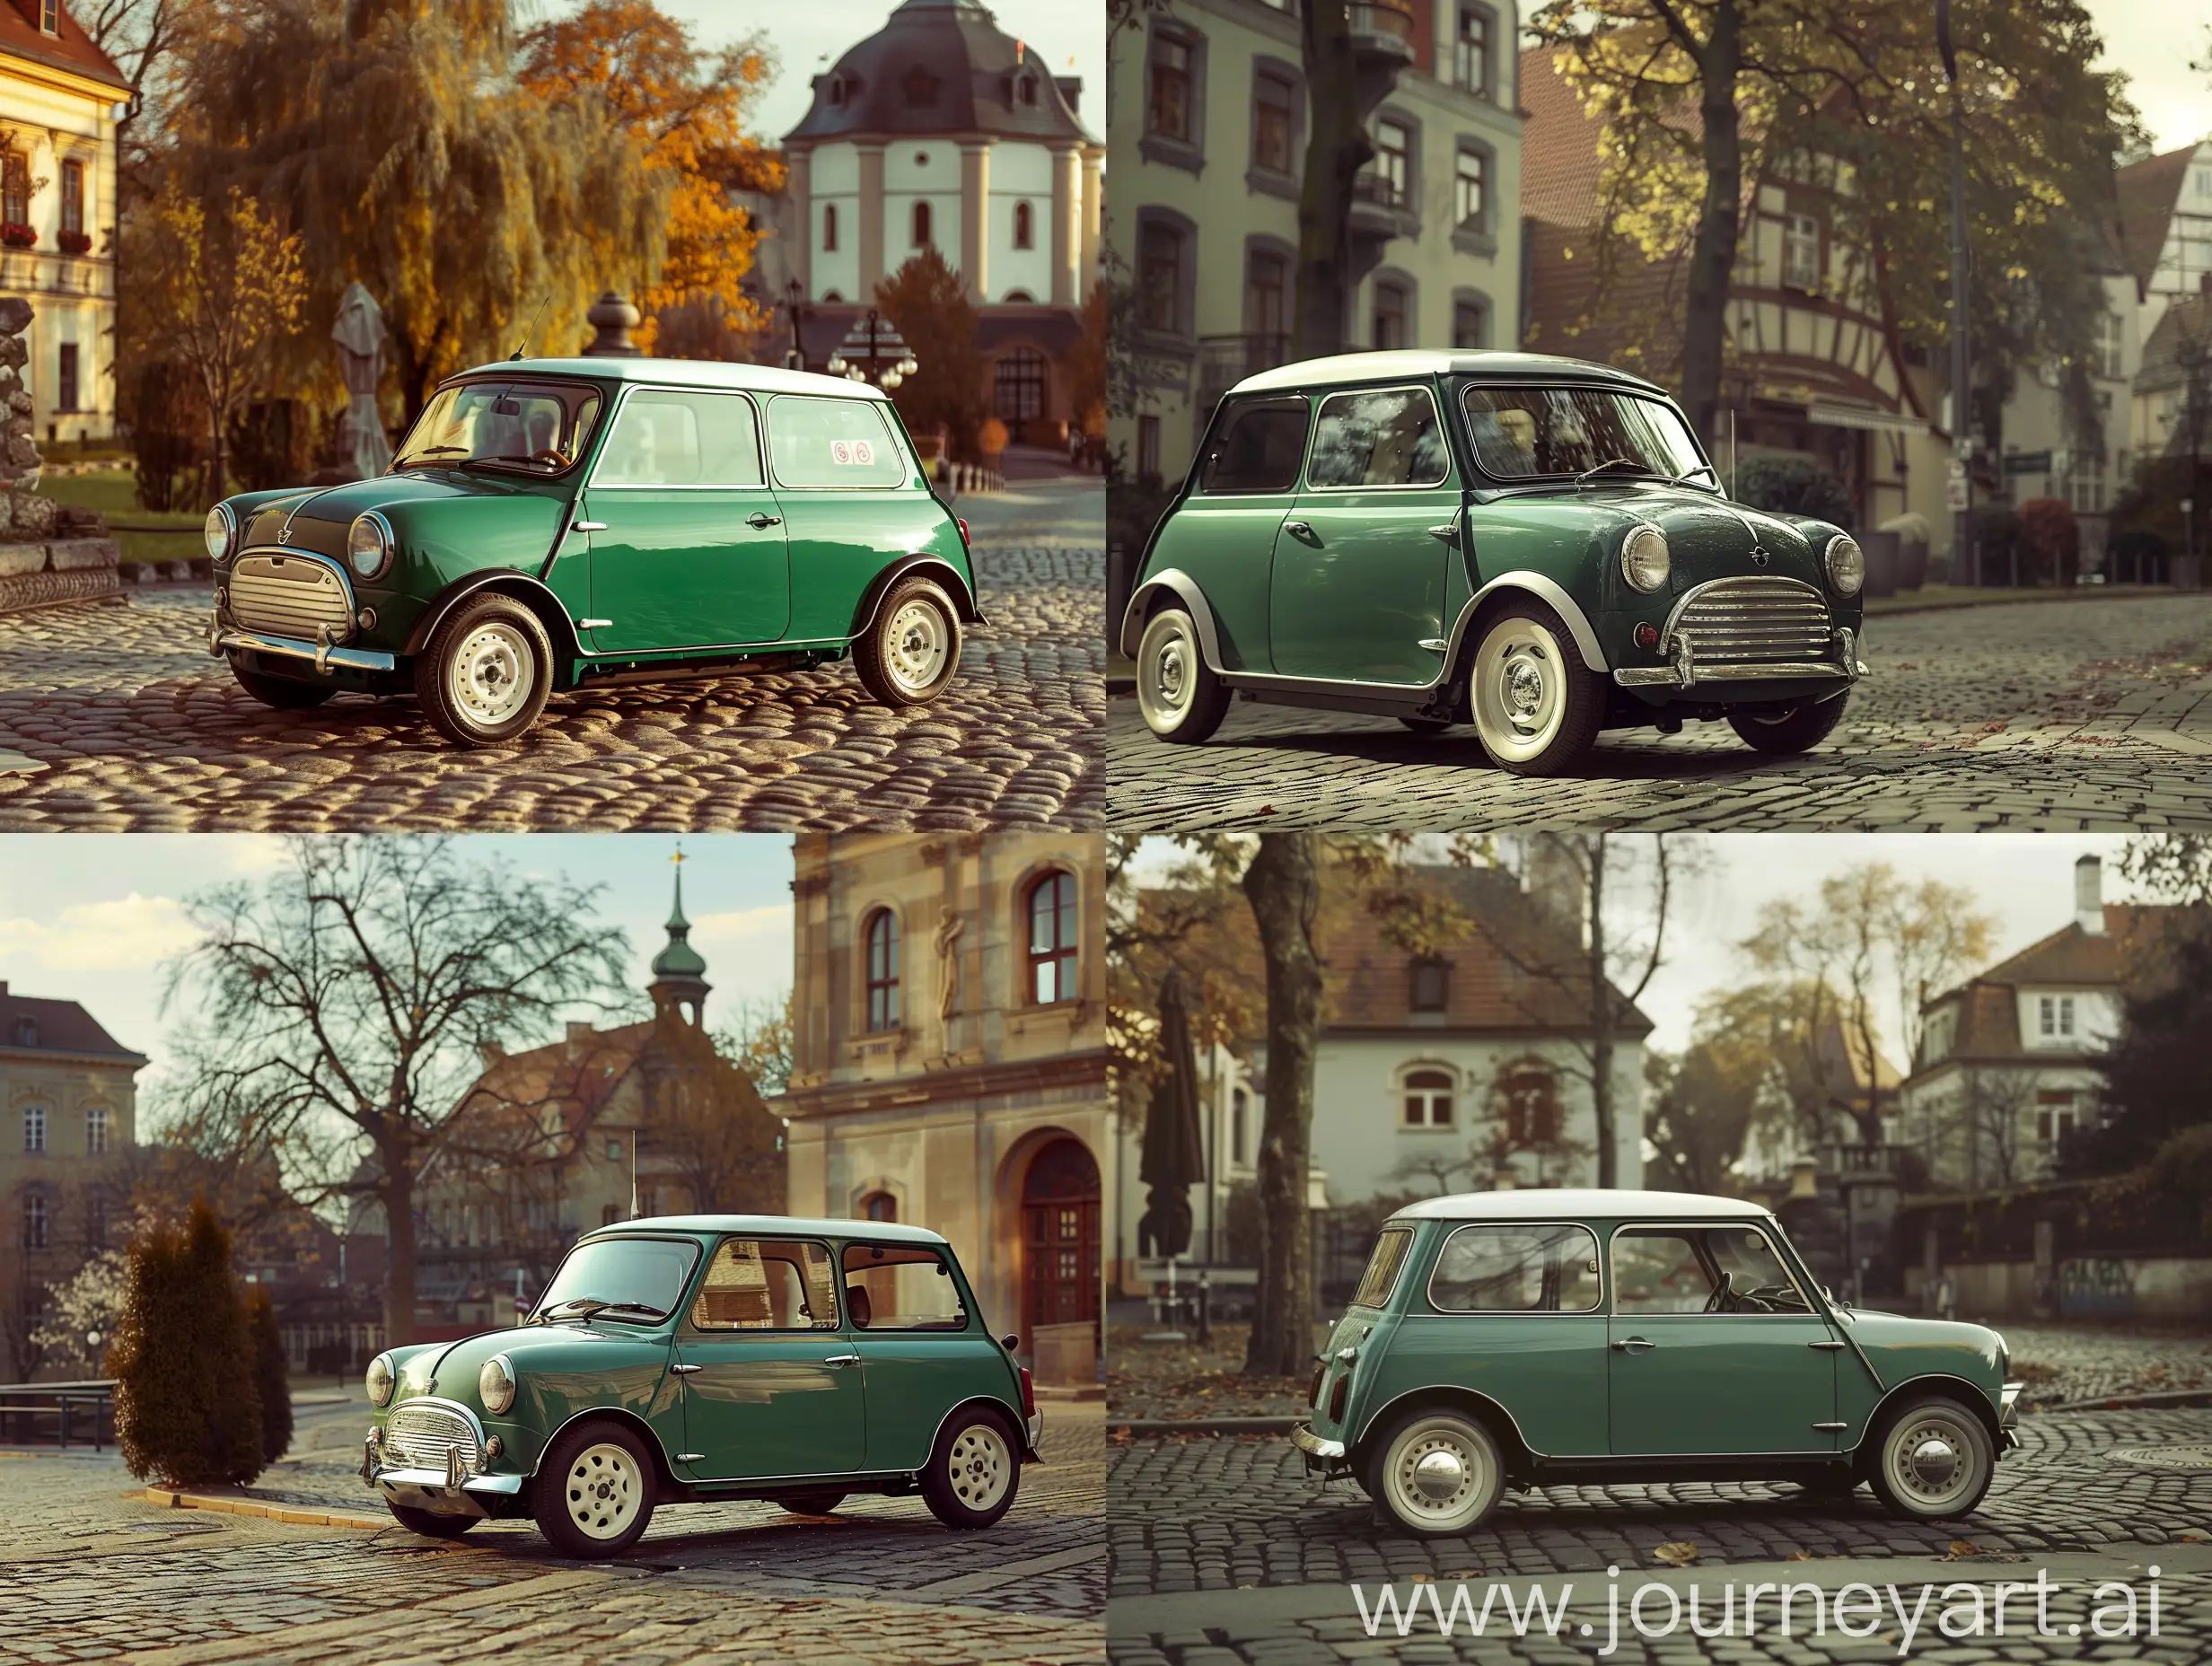 Charming-Vintage-Mini-Morris-Electric-Car-on-Cobblestone-Street